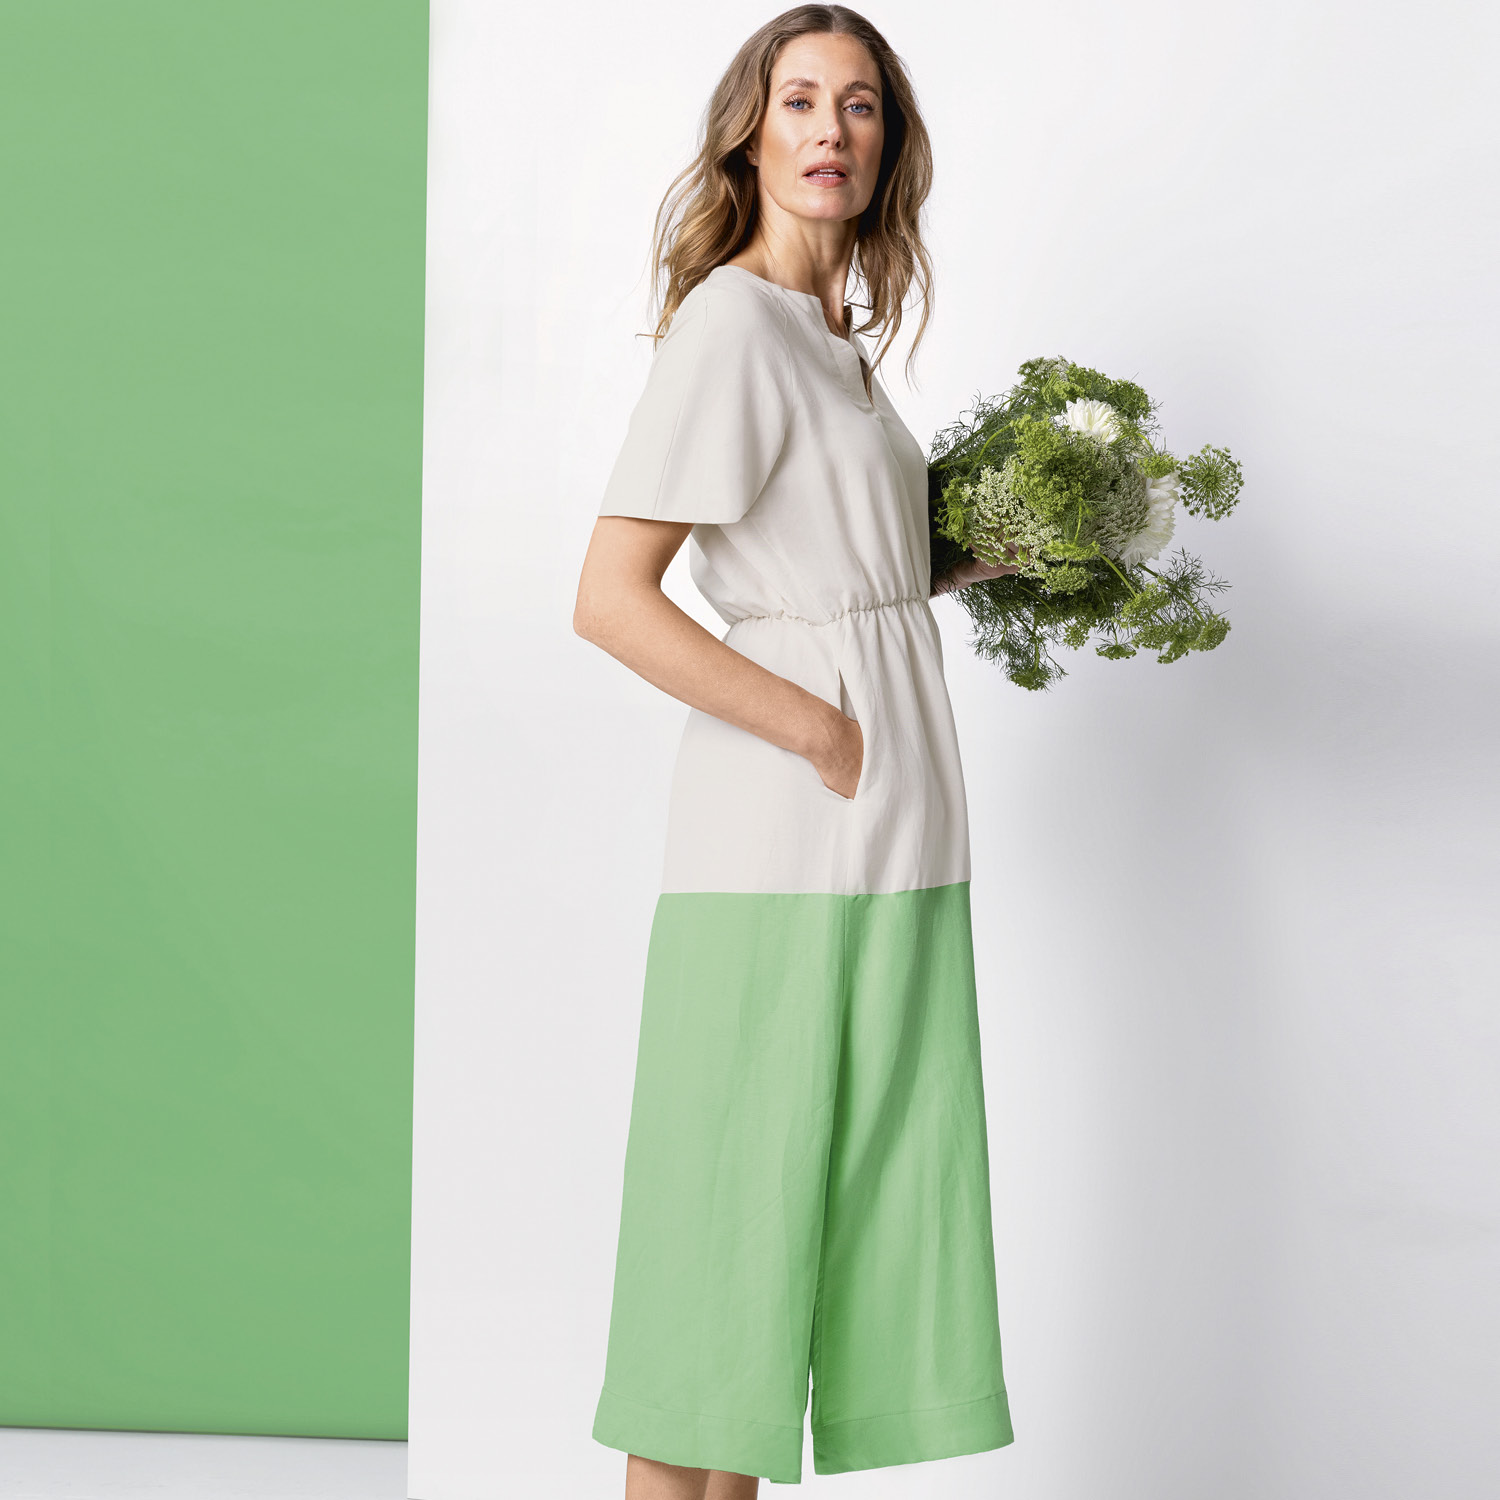 lovely sisters - Midikleid Klea_LS - beige/grün - Leinen-Viskose-Mischung-voluminöses Kleid